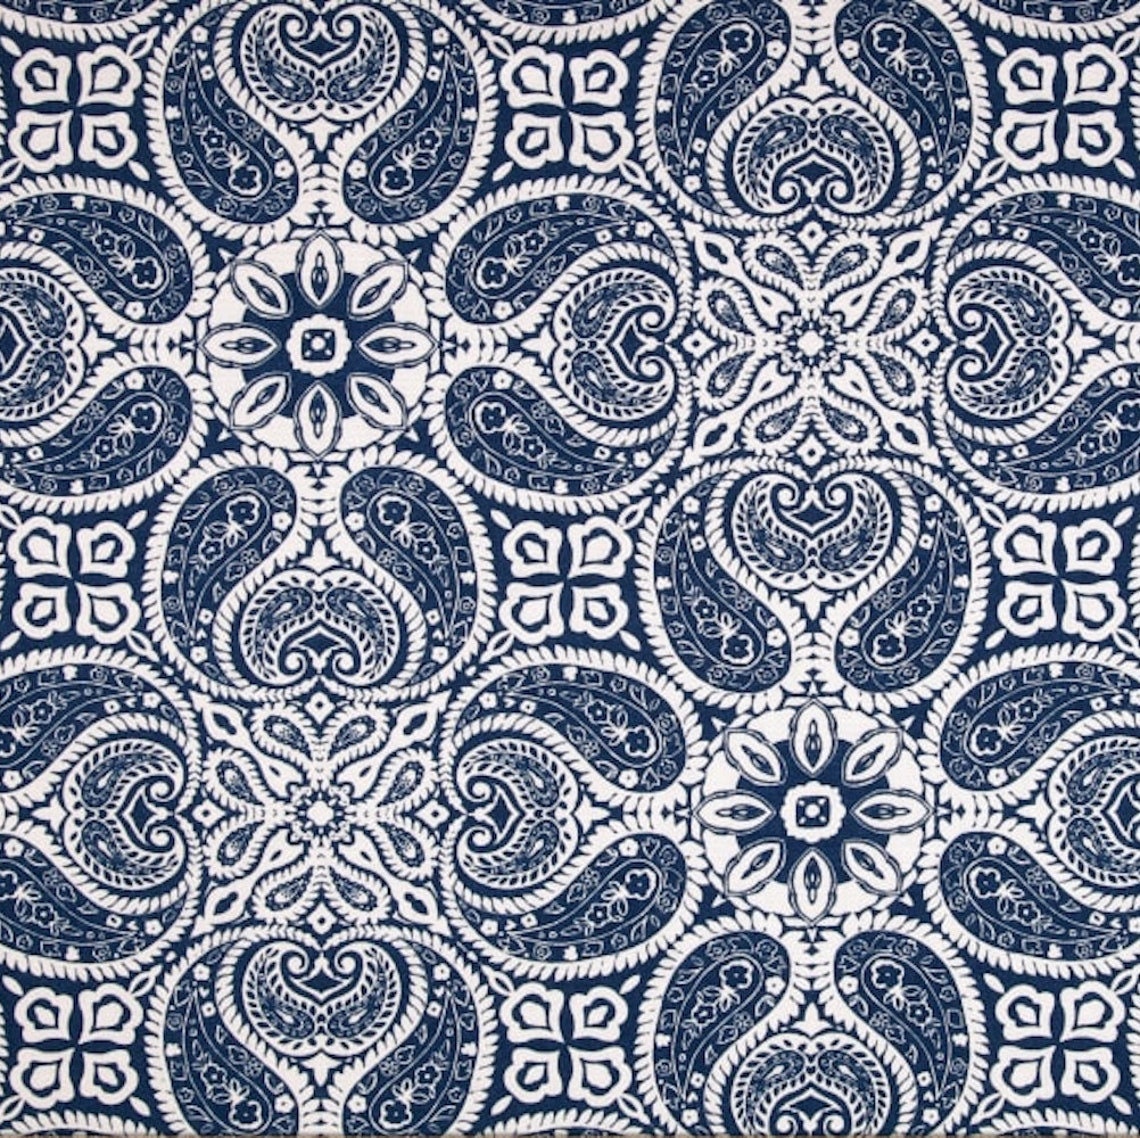 pinch pleated curtain panels pair in tibi navy blue geometric paisley